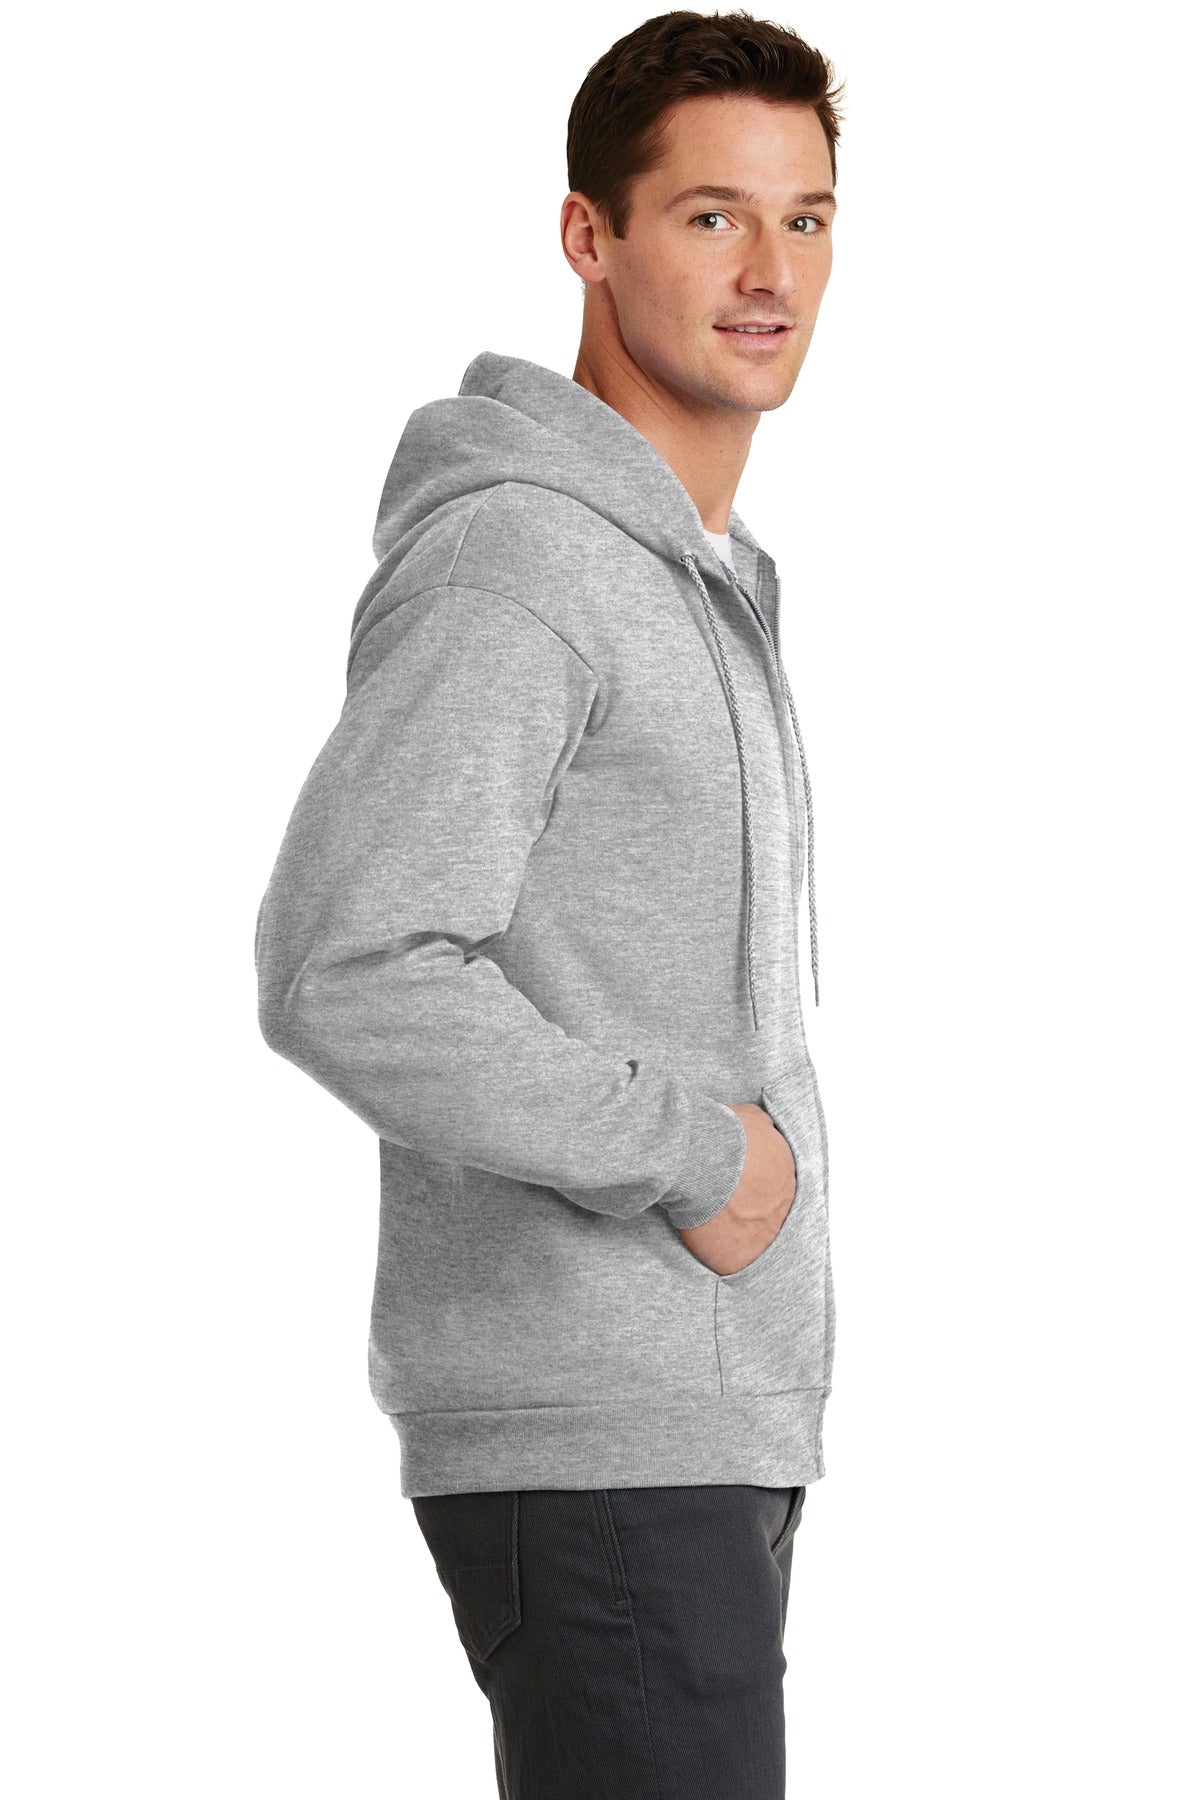 Port & Company® - Core Fleece Full-Zip Hooded Sweatshirt. PC78ZH - DFW Impression